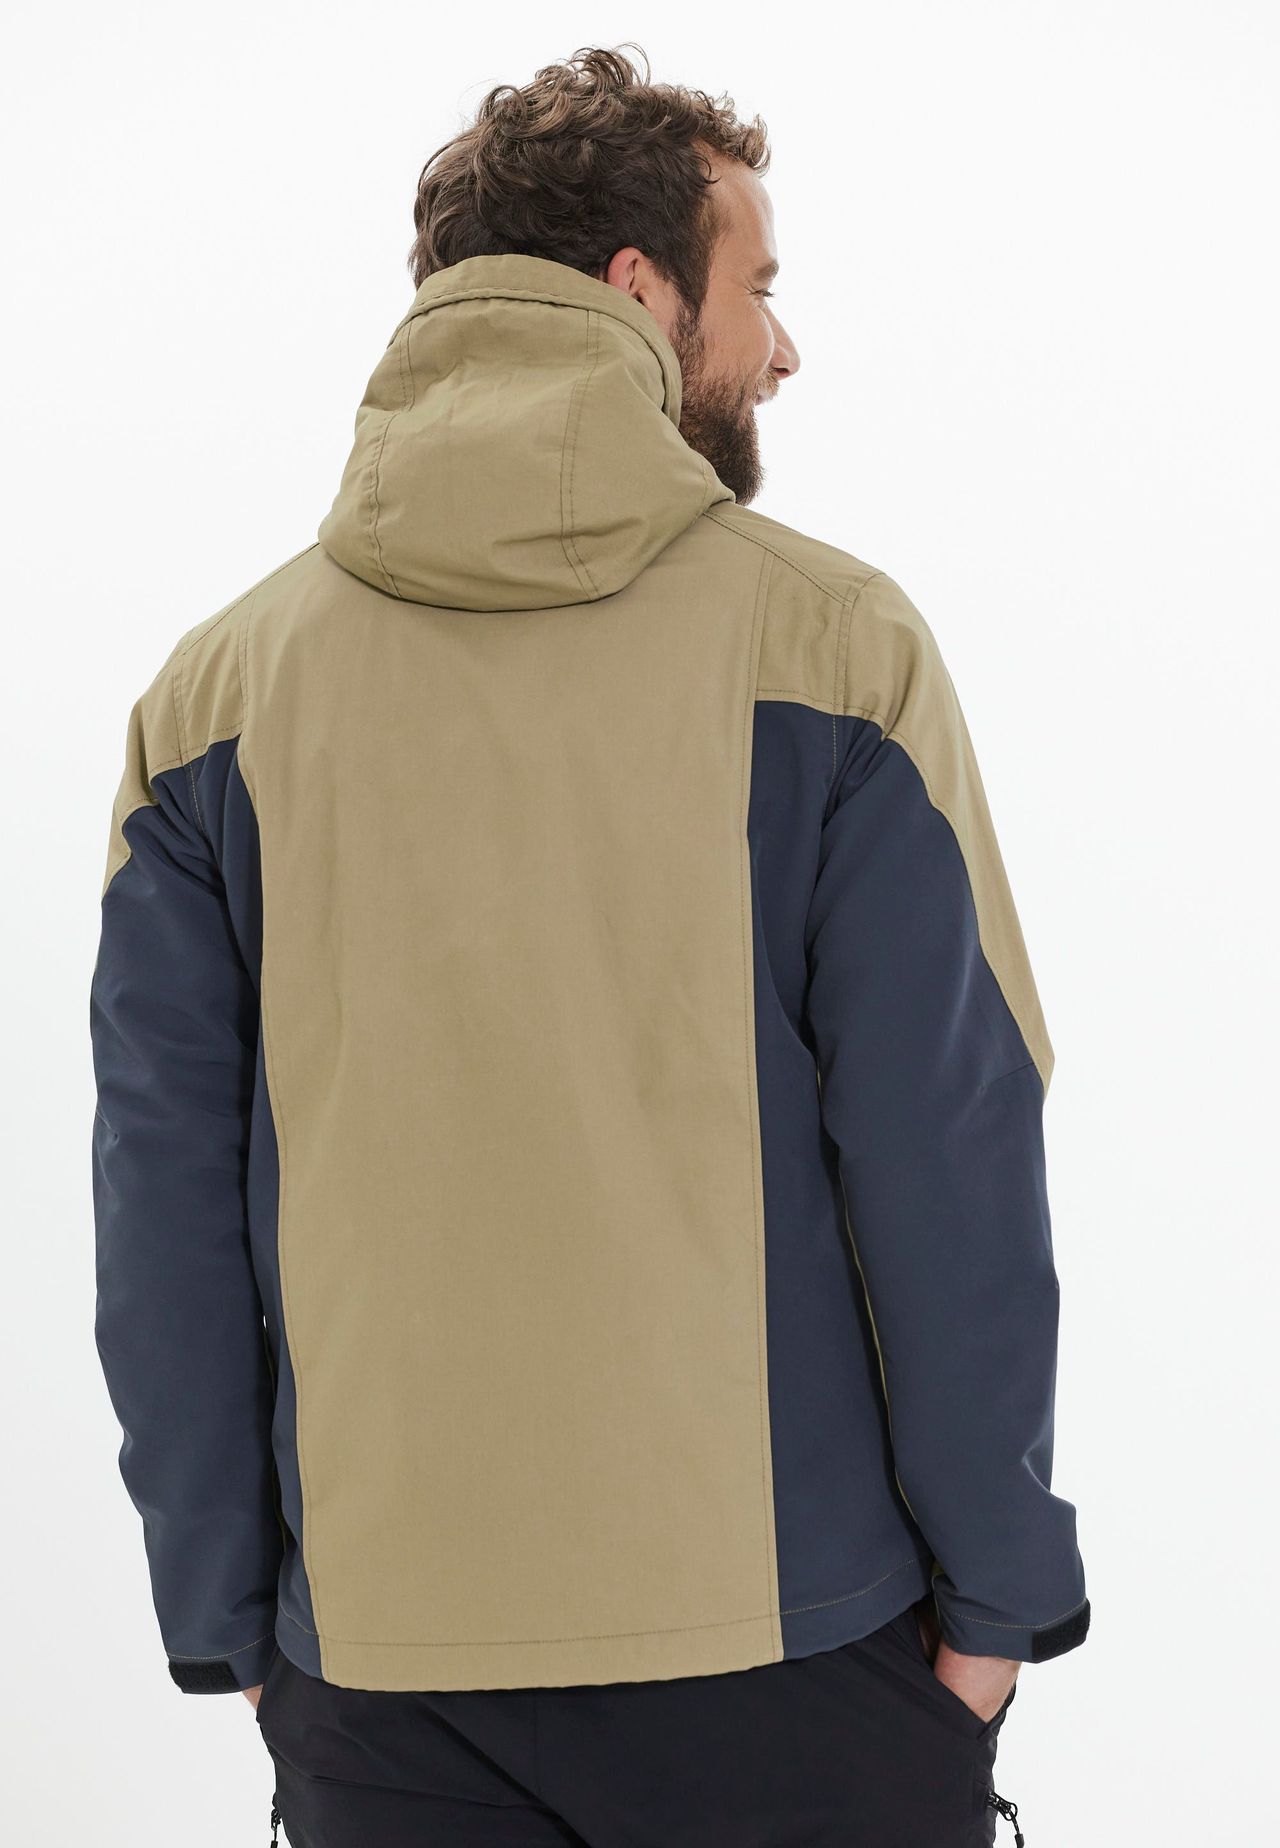 Sport Sportbekleidung WHISTLER Funktionsjacke ELDON M Jacket aus atmungsaktivem Baumwoll-Polyester-Mix